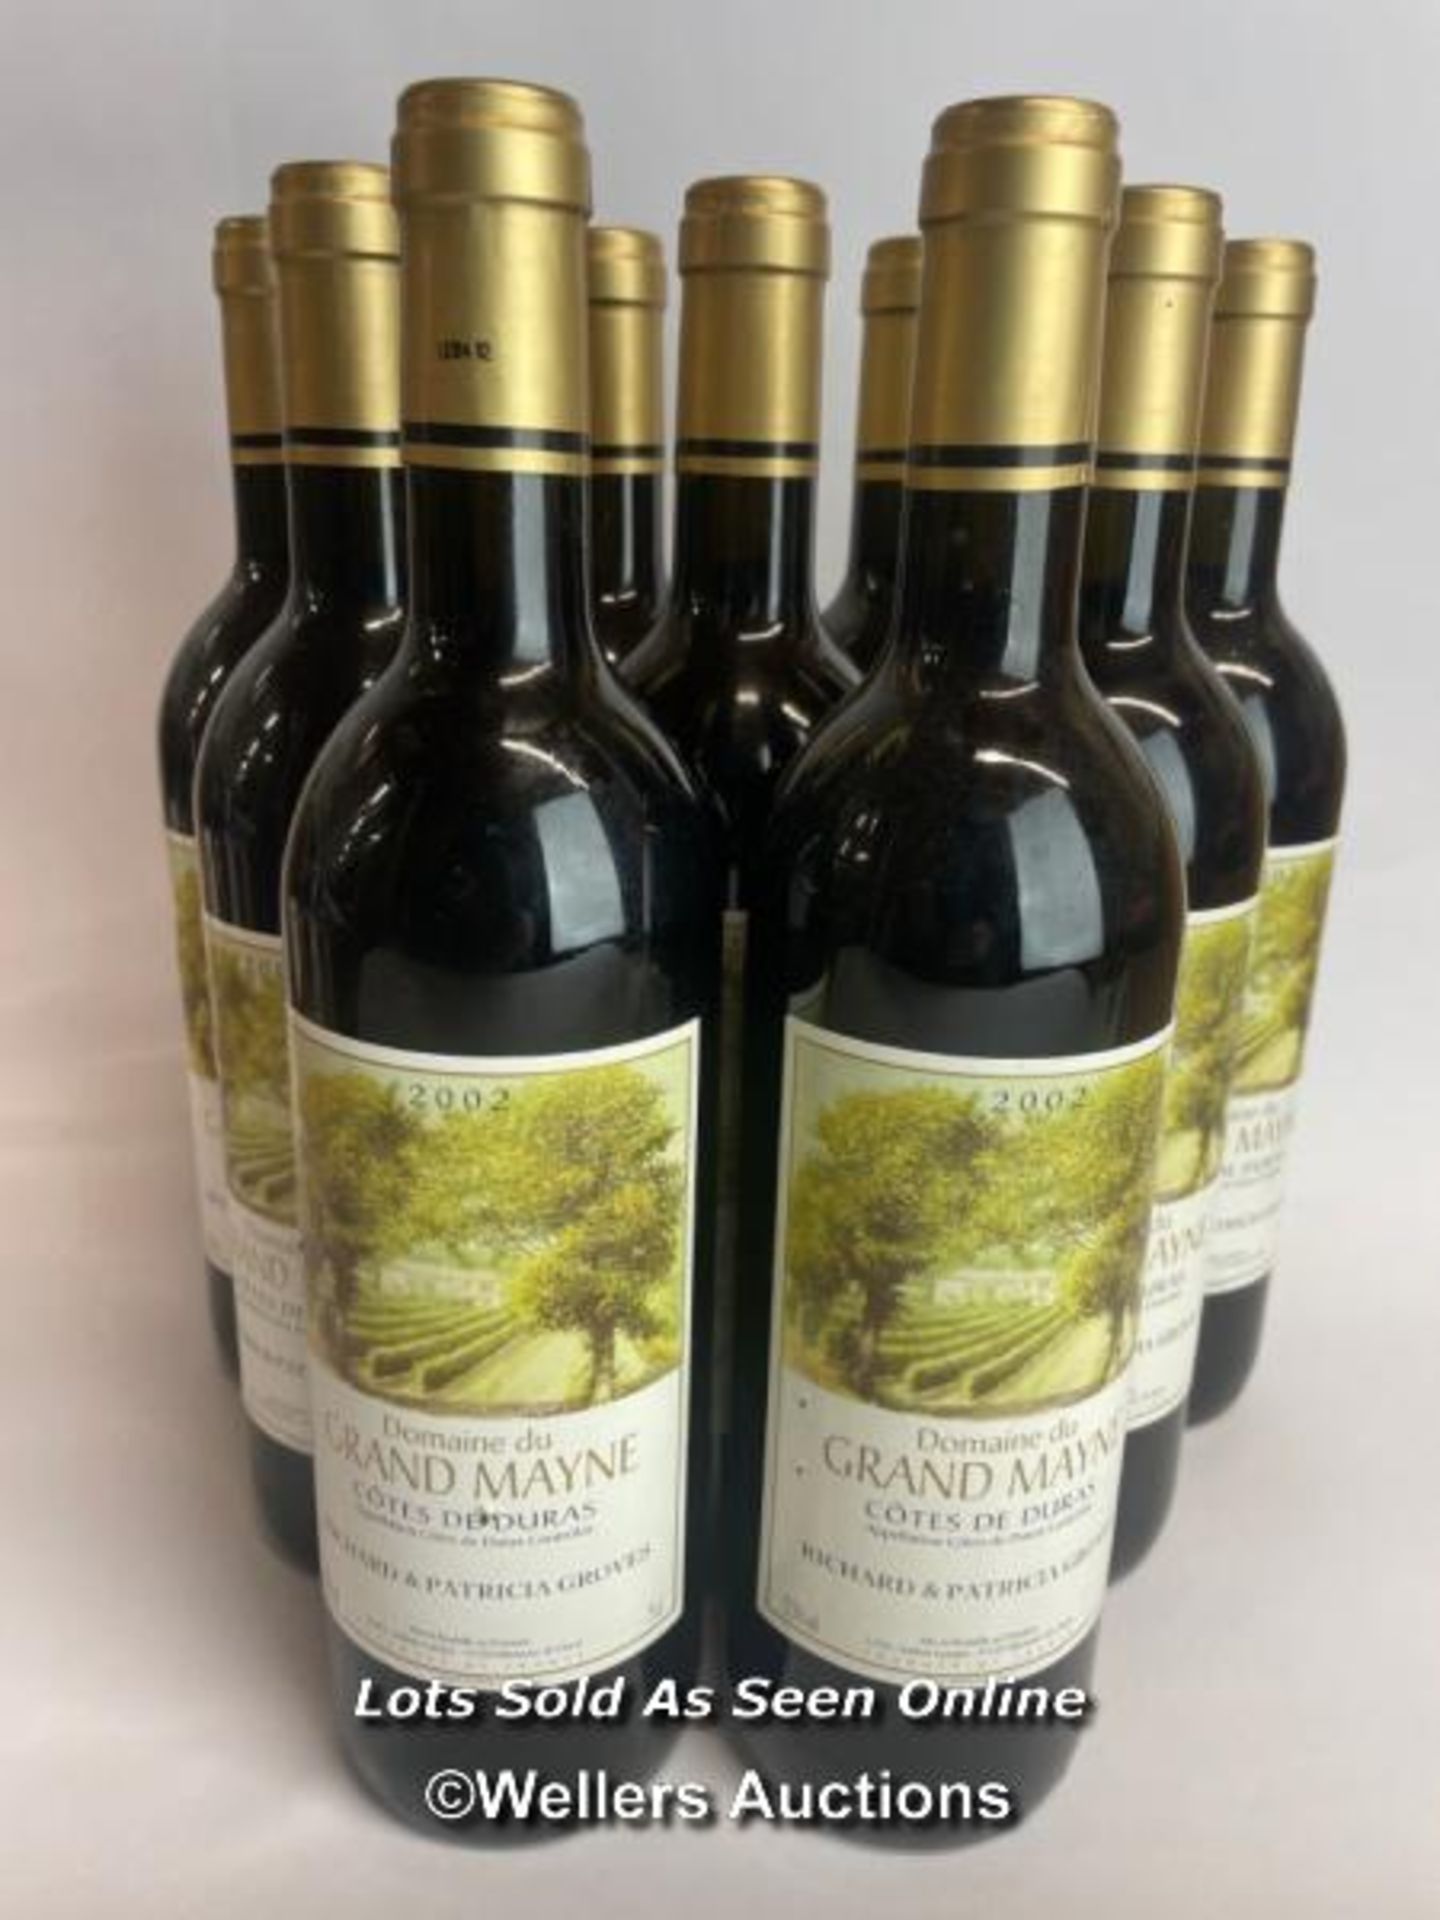 Nine bottles of 2002 Domaine Du Grande Mayne Cotes De Duras, Richard and Patricia Groves. 75cl, 12.